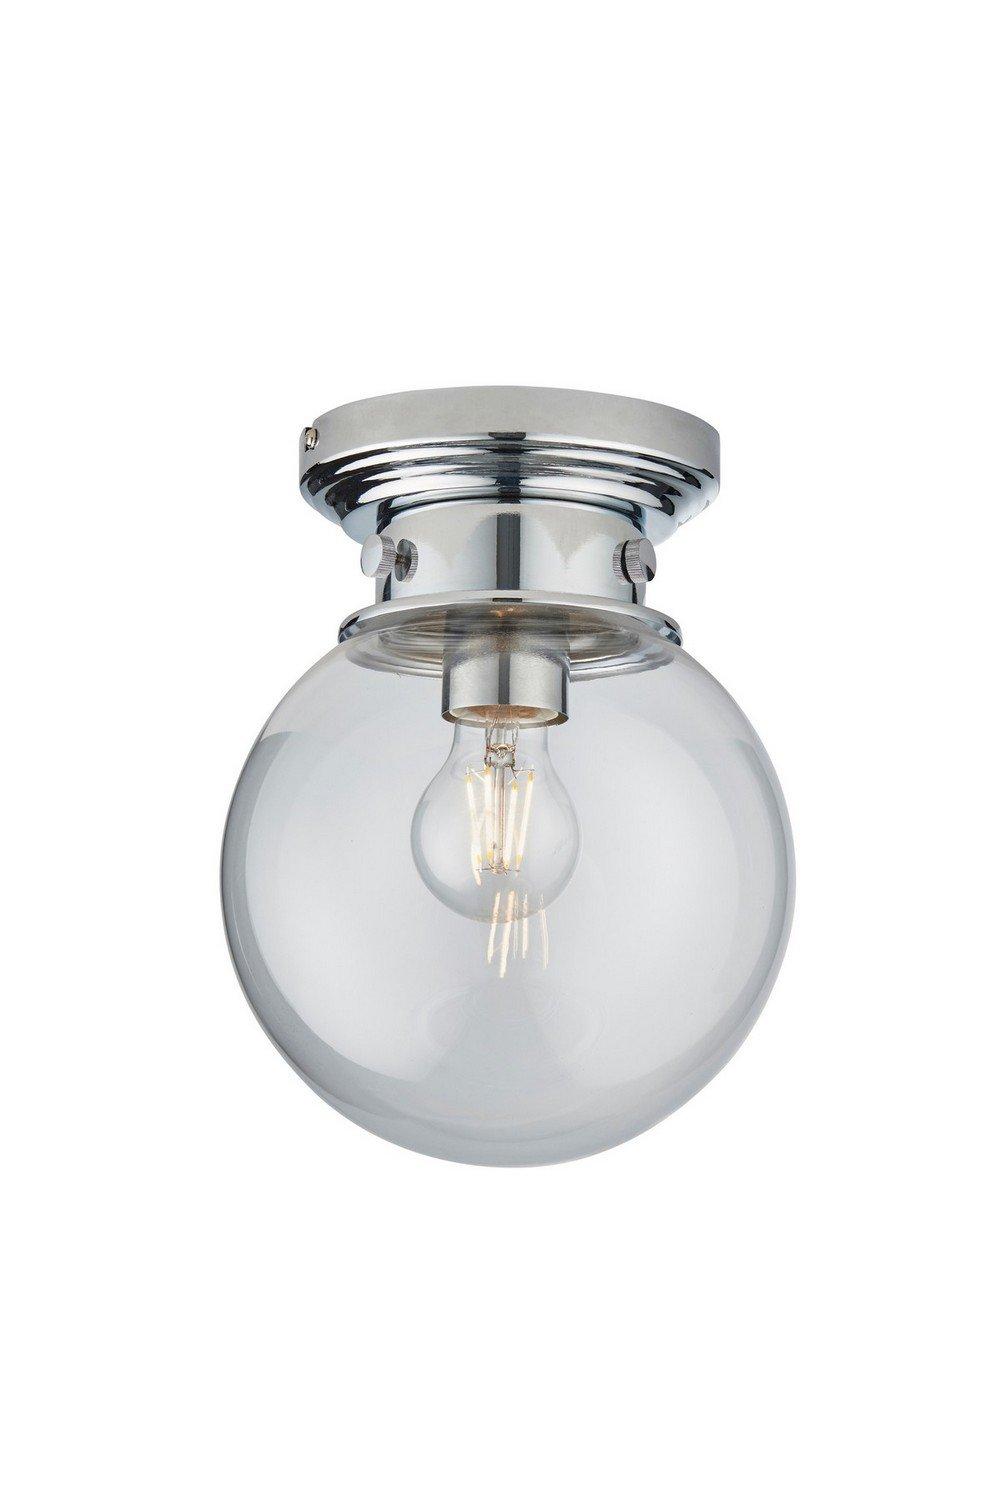 Cheswick Semi Flush Ceiling Light Chrome Clear Glass Globe Shade IP44